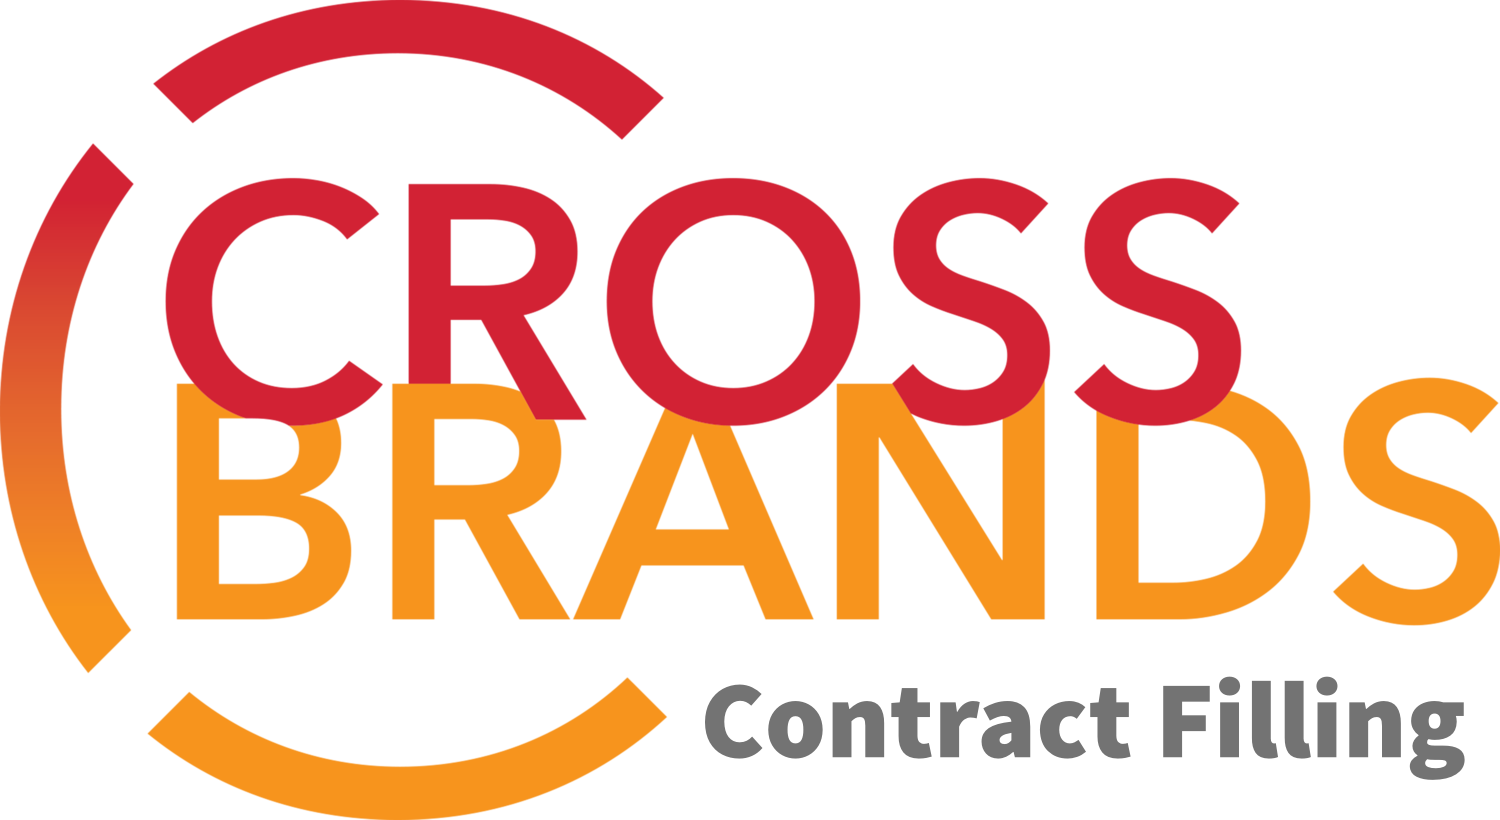 Cross Brands Contract Filling